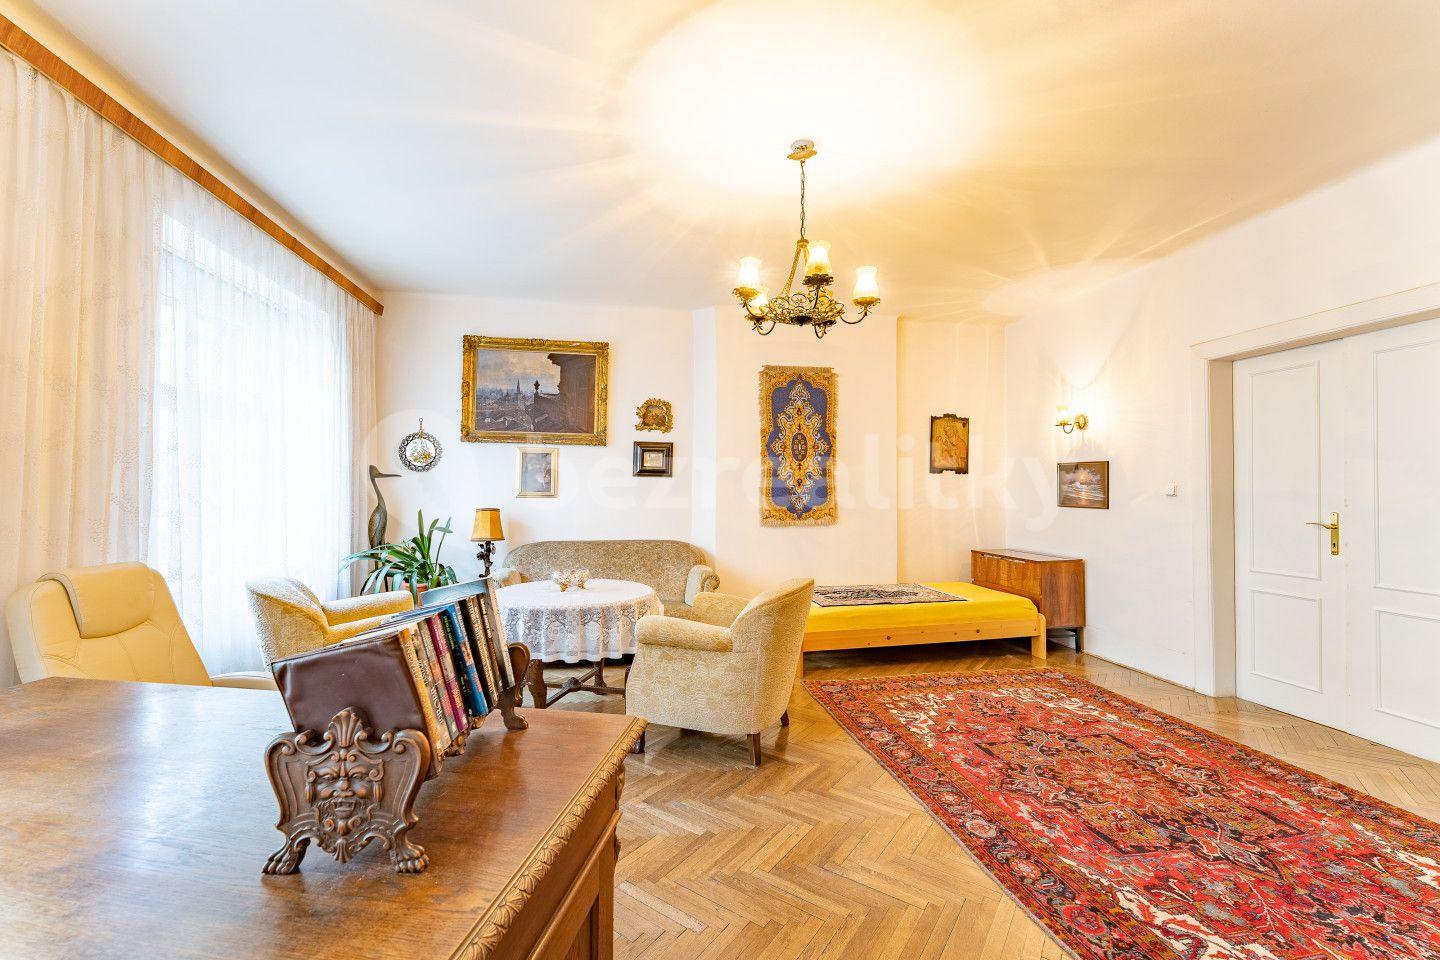 4 bedroom flat for sale, 114 m², Jaromírova, Prague, Prague